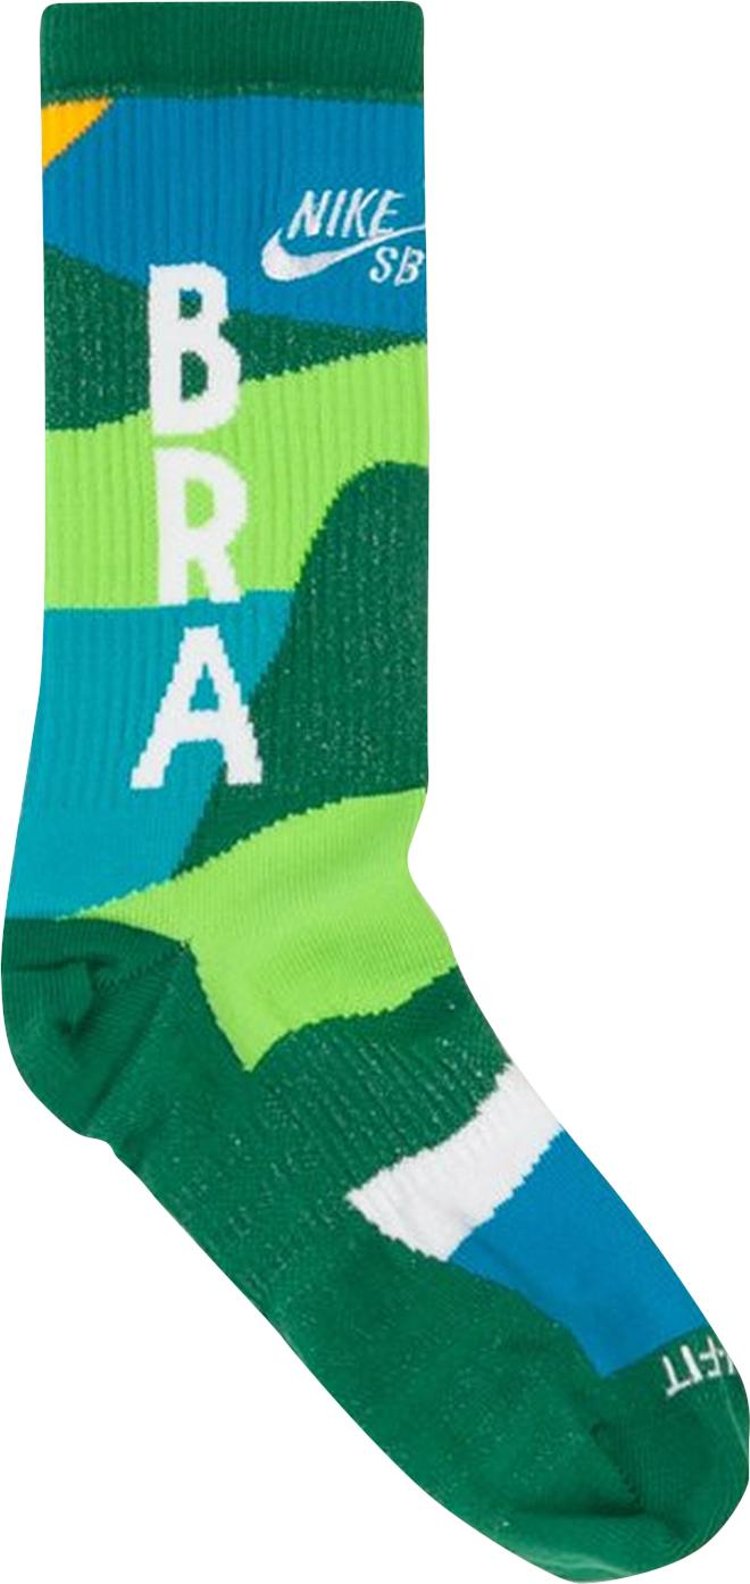 Nike SB x Parra Brazil Federation Kit Socks 'White/Clover'